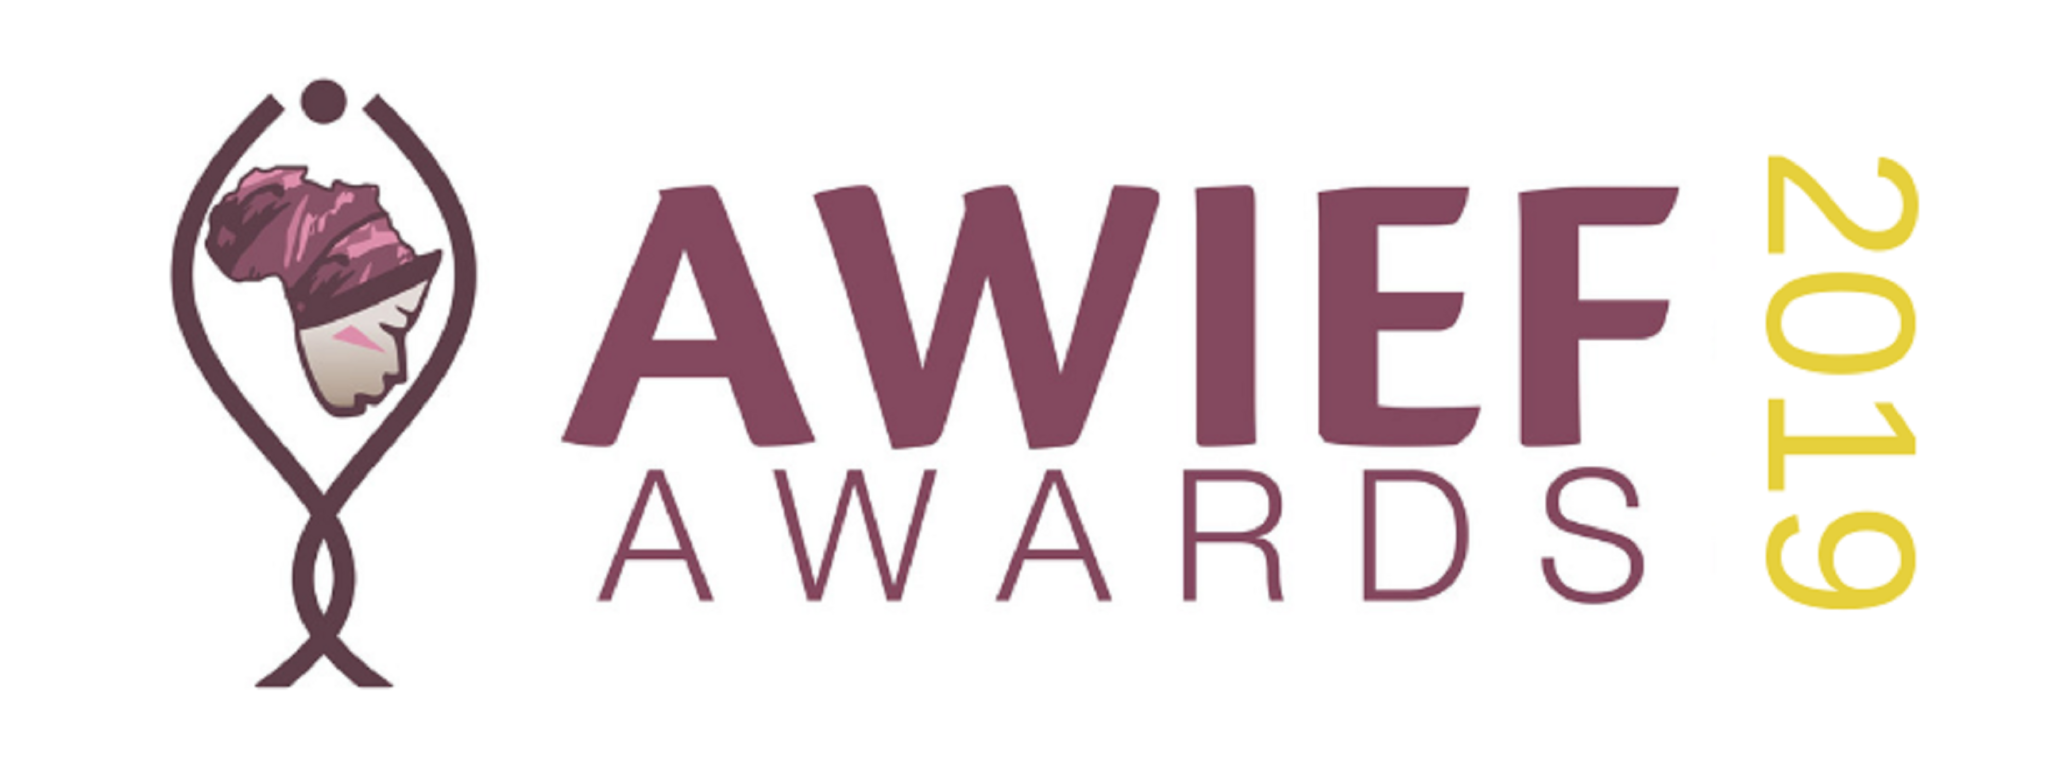 2019 AWIEF Awards